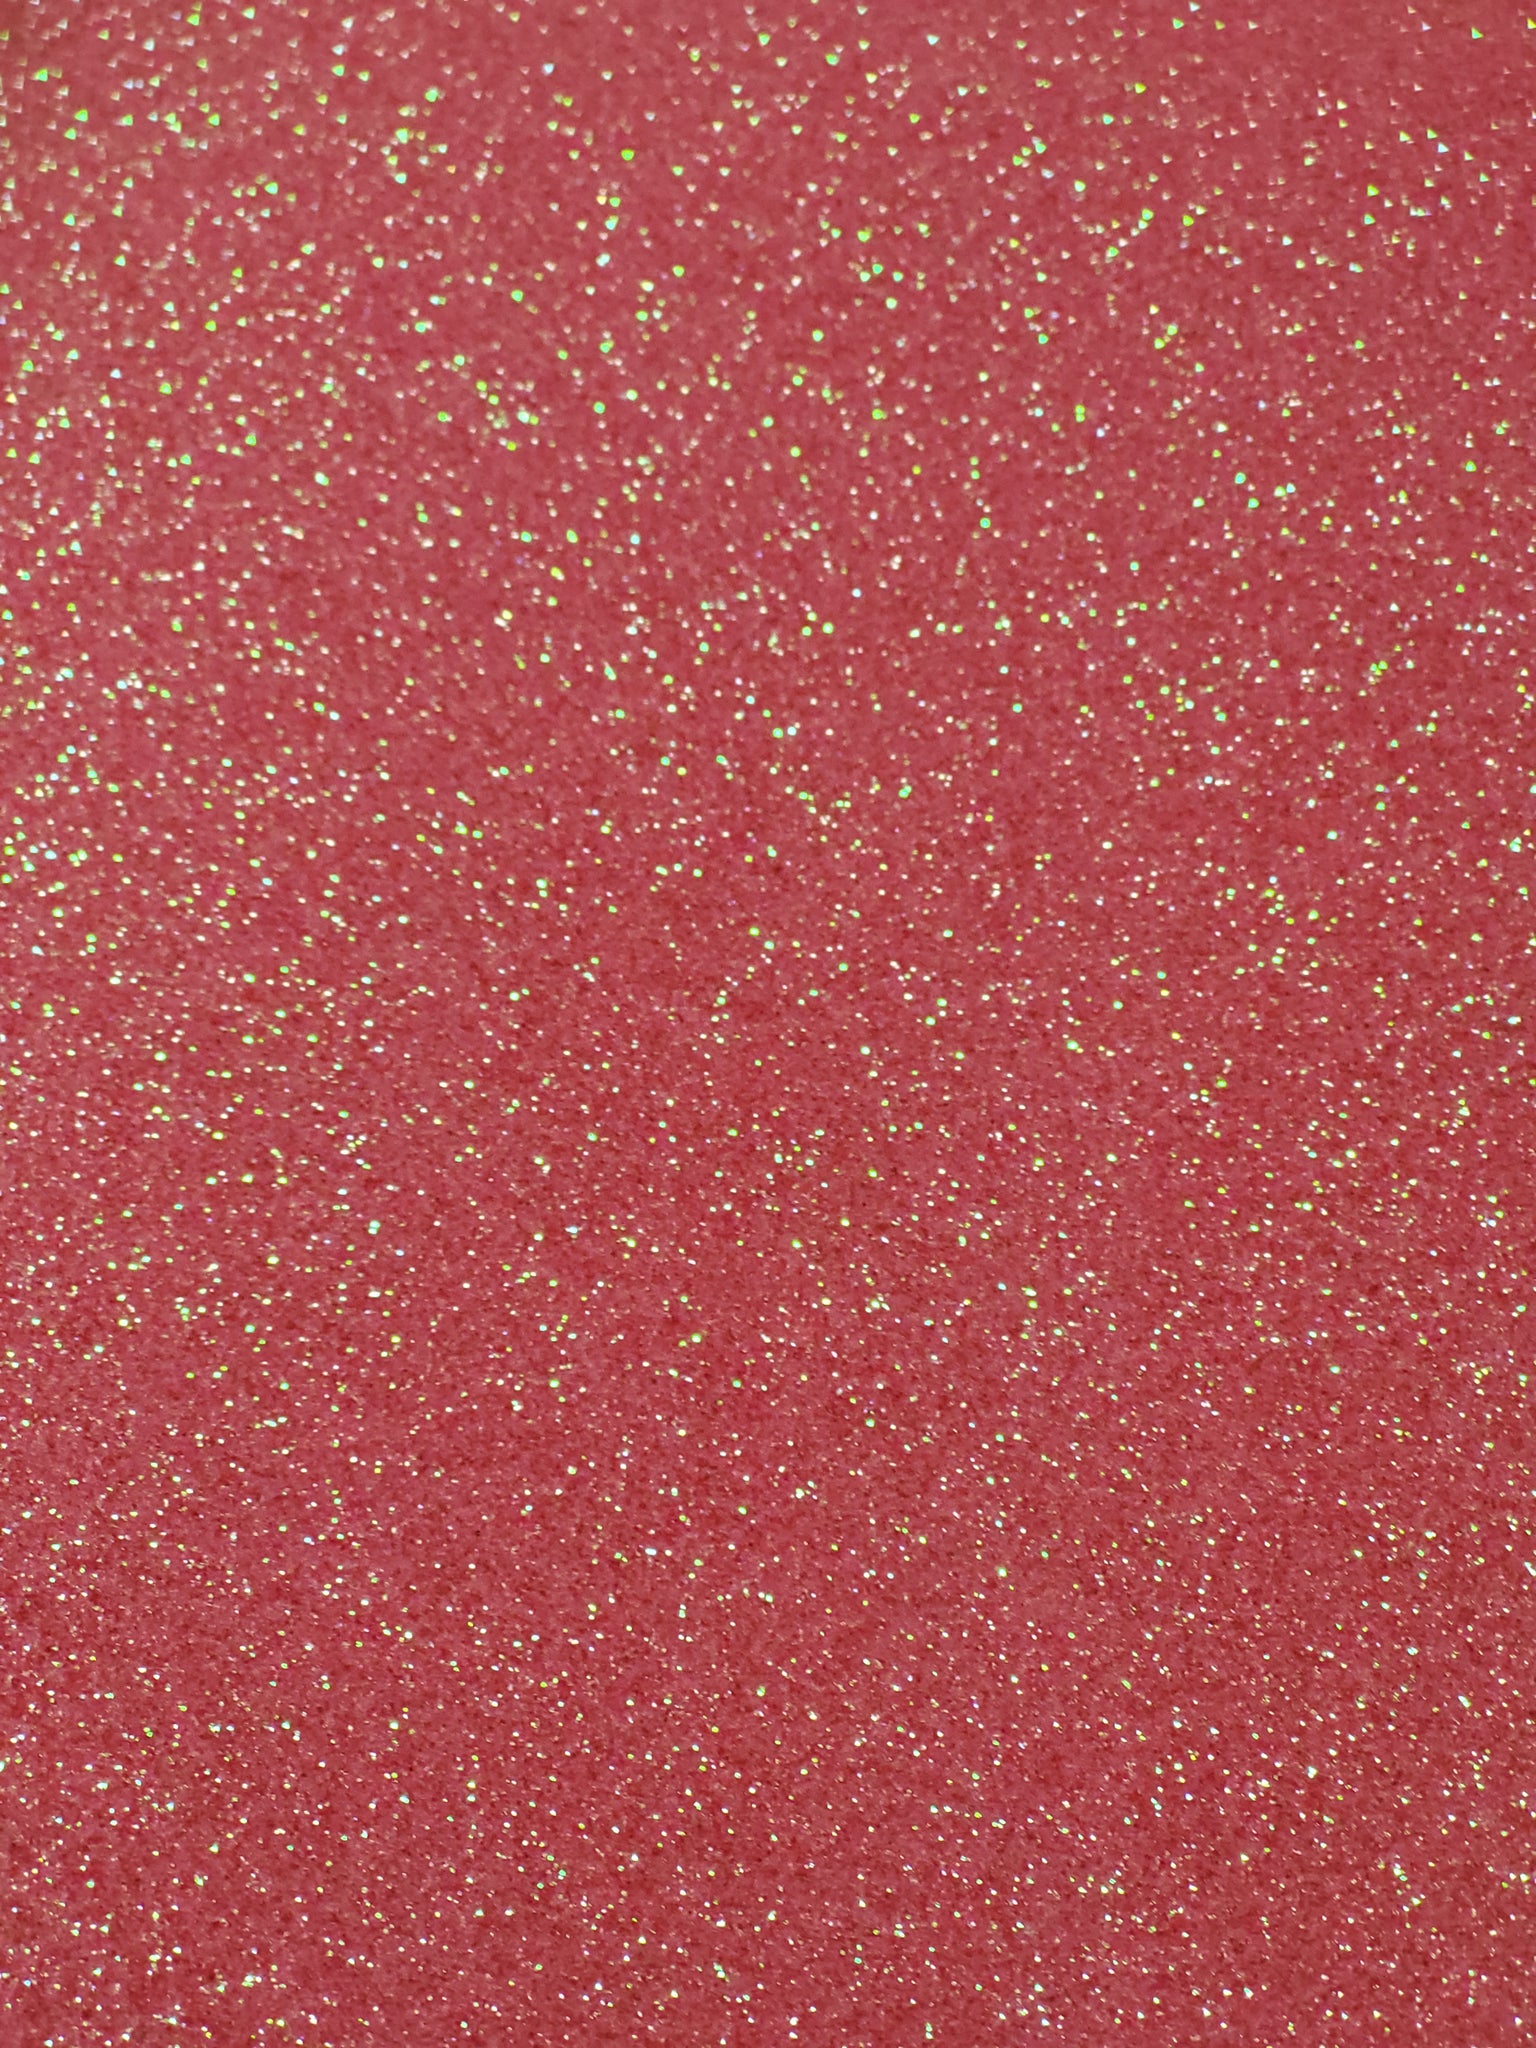 Blizgantis Foamiranas - Raudona  Spalva su Blizgučiais (60 x 70)